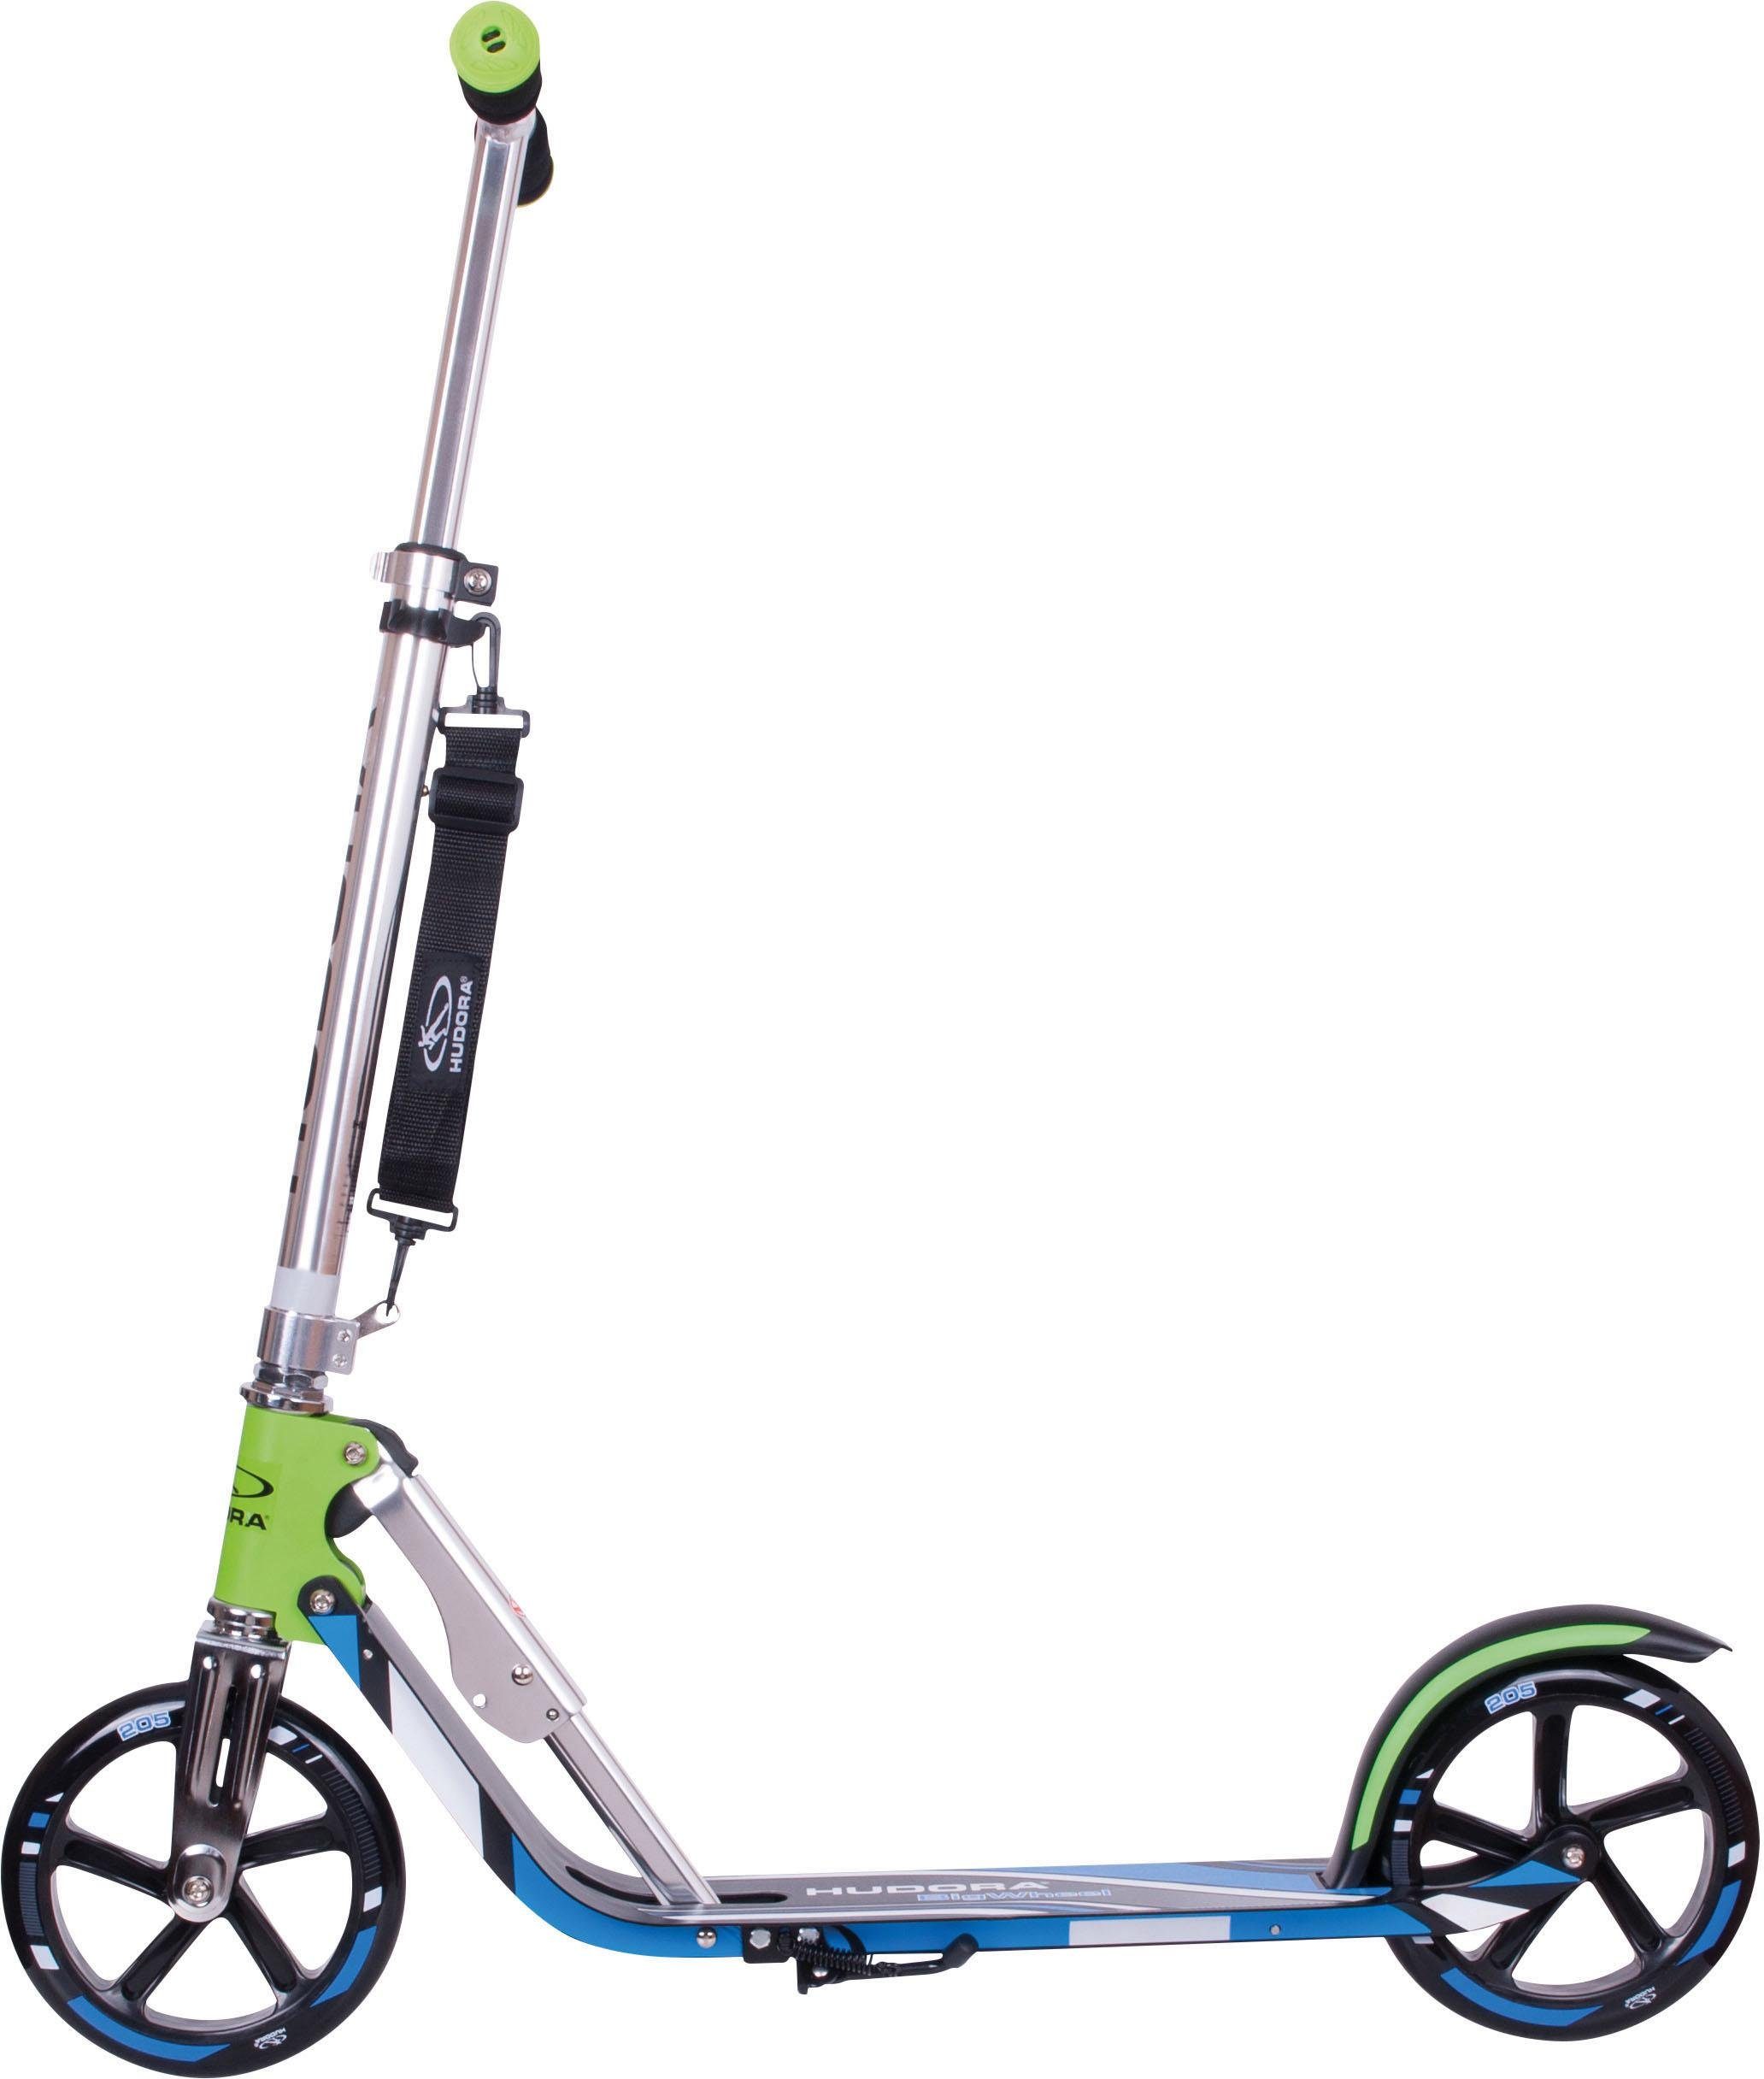 Hudora Scooter Big Wheel grün/blau 205